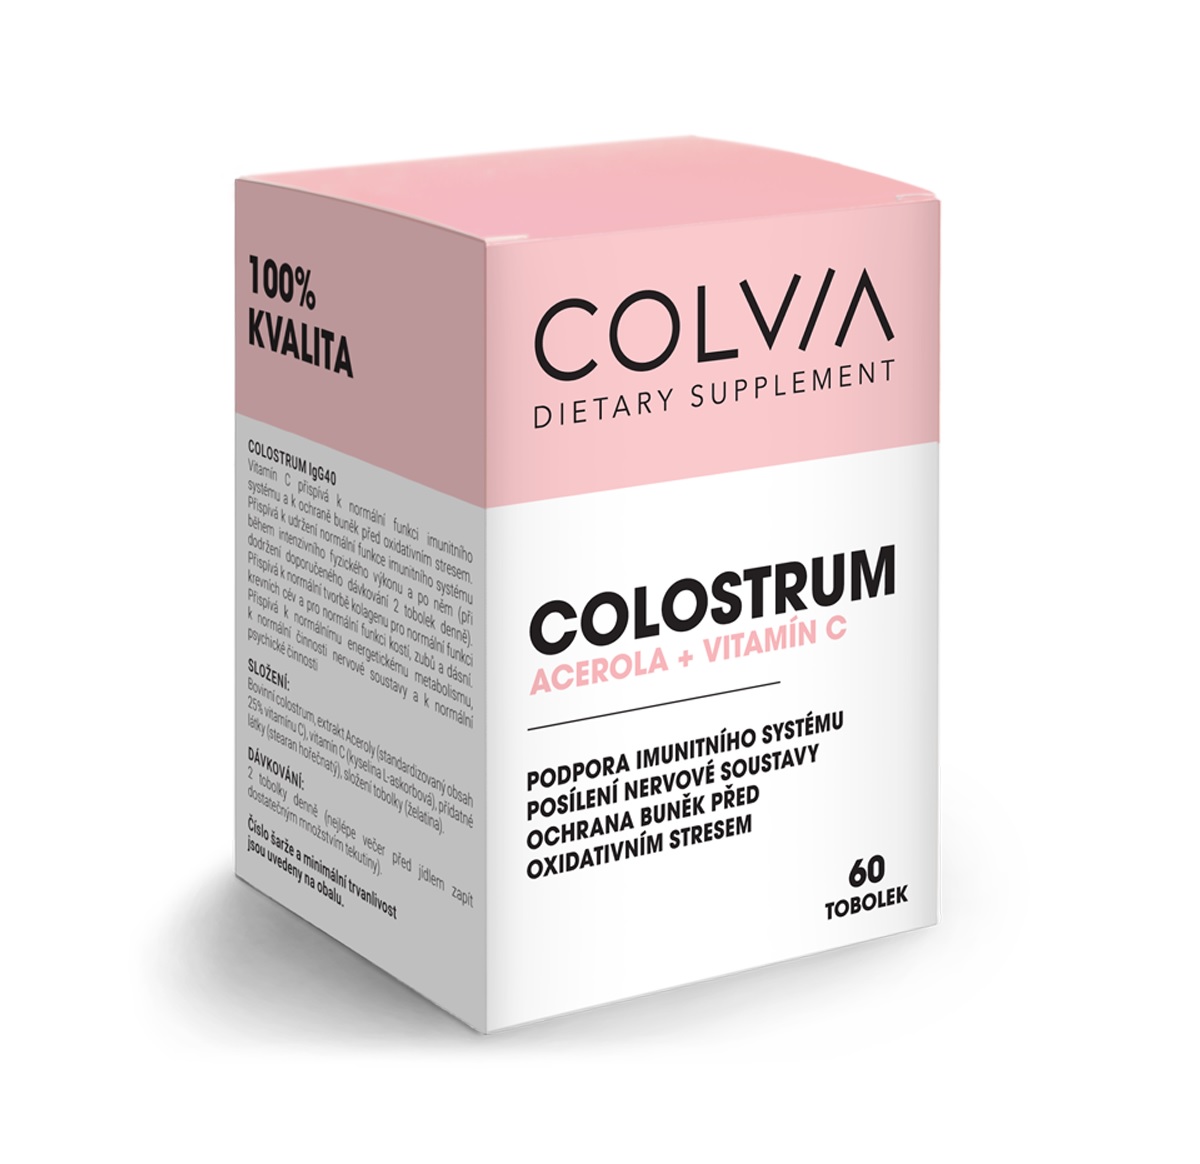 COLVIA Colostrum + Acerola + vitamín C 60 tobolek COLVIA